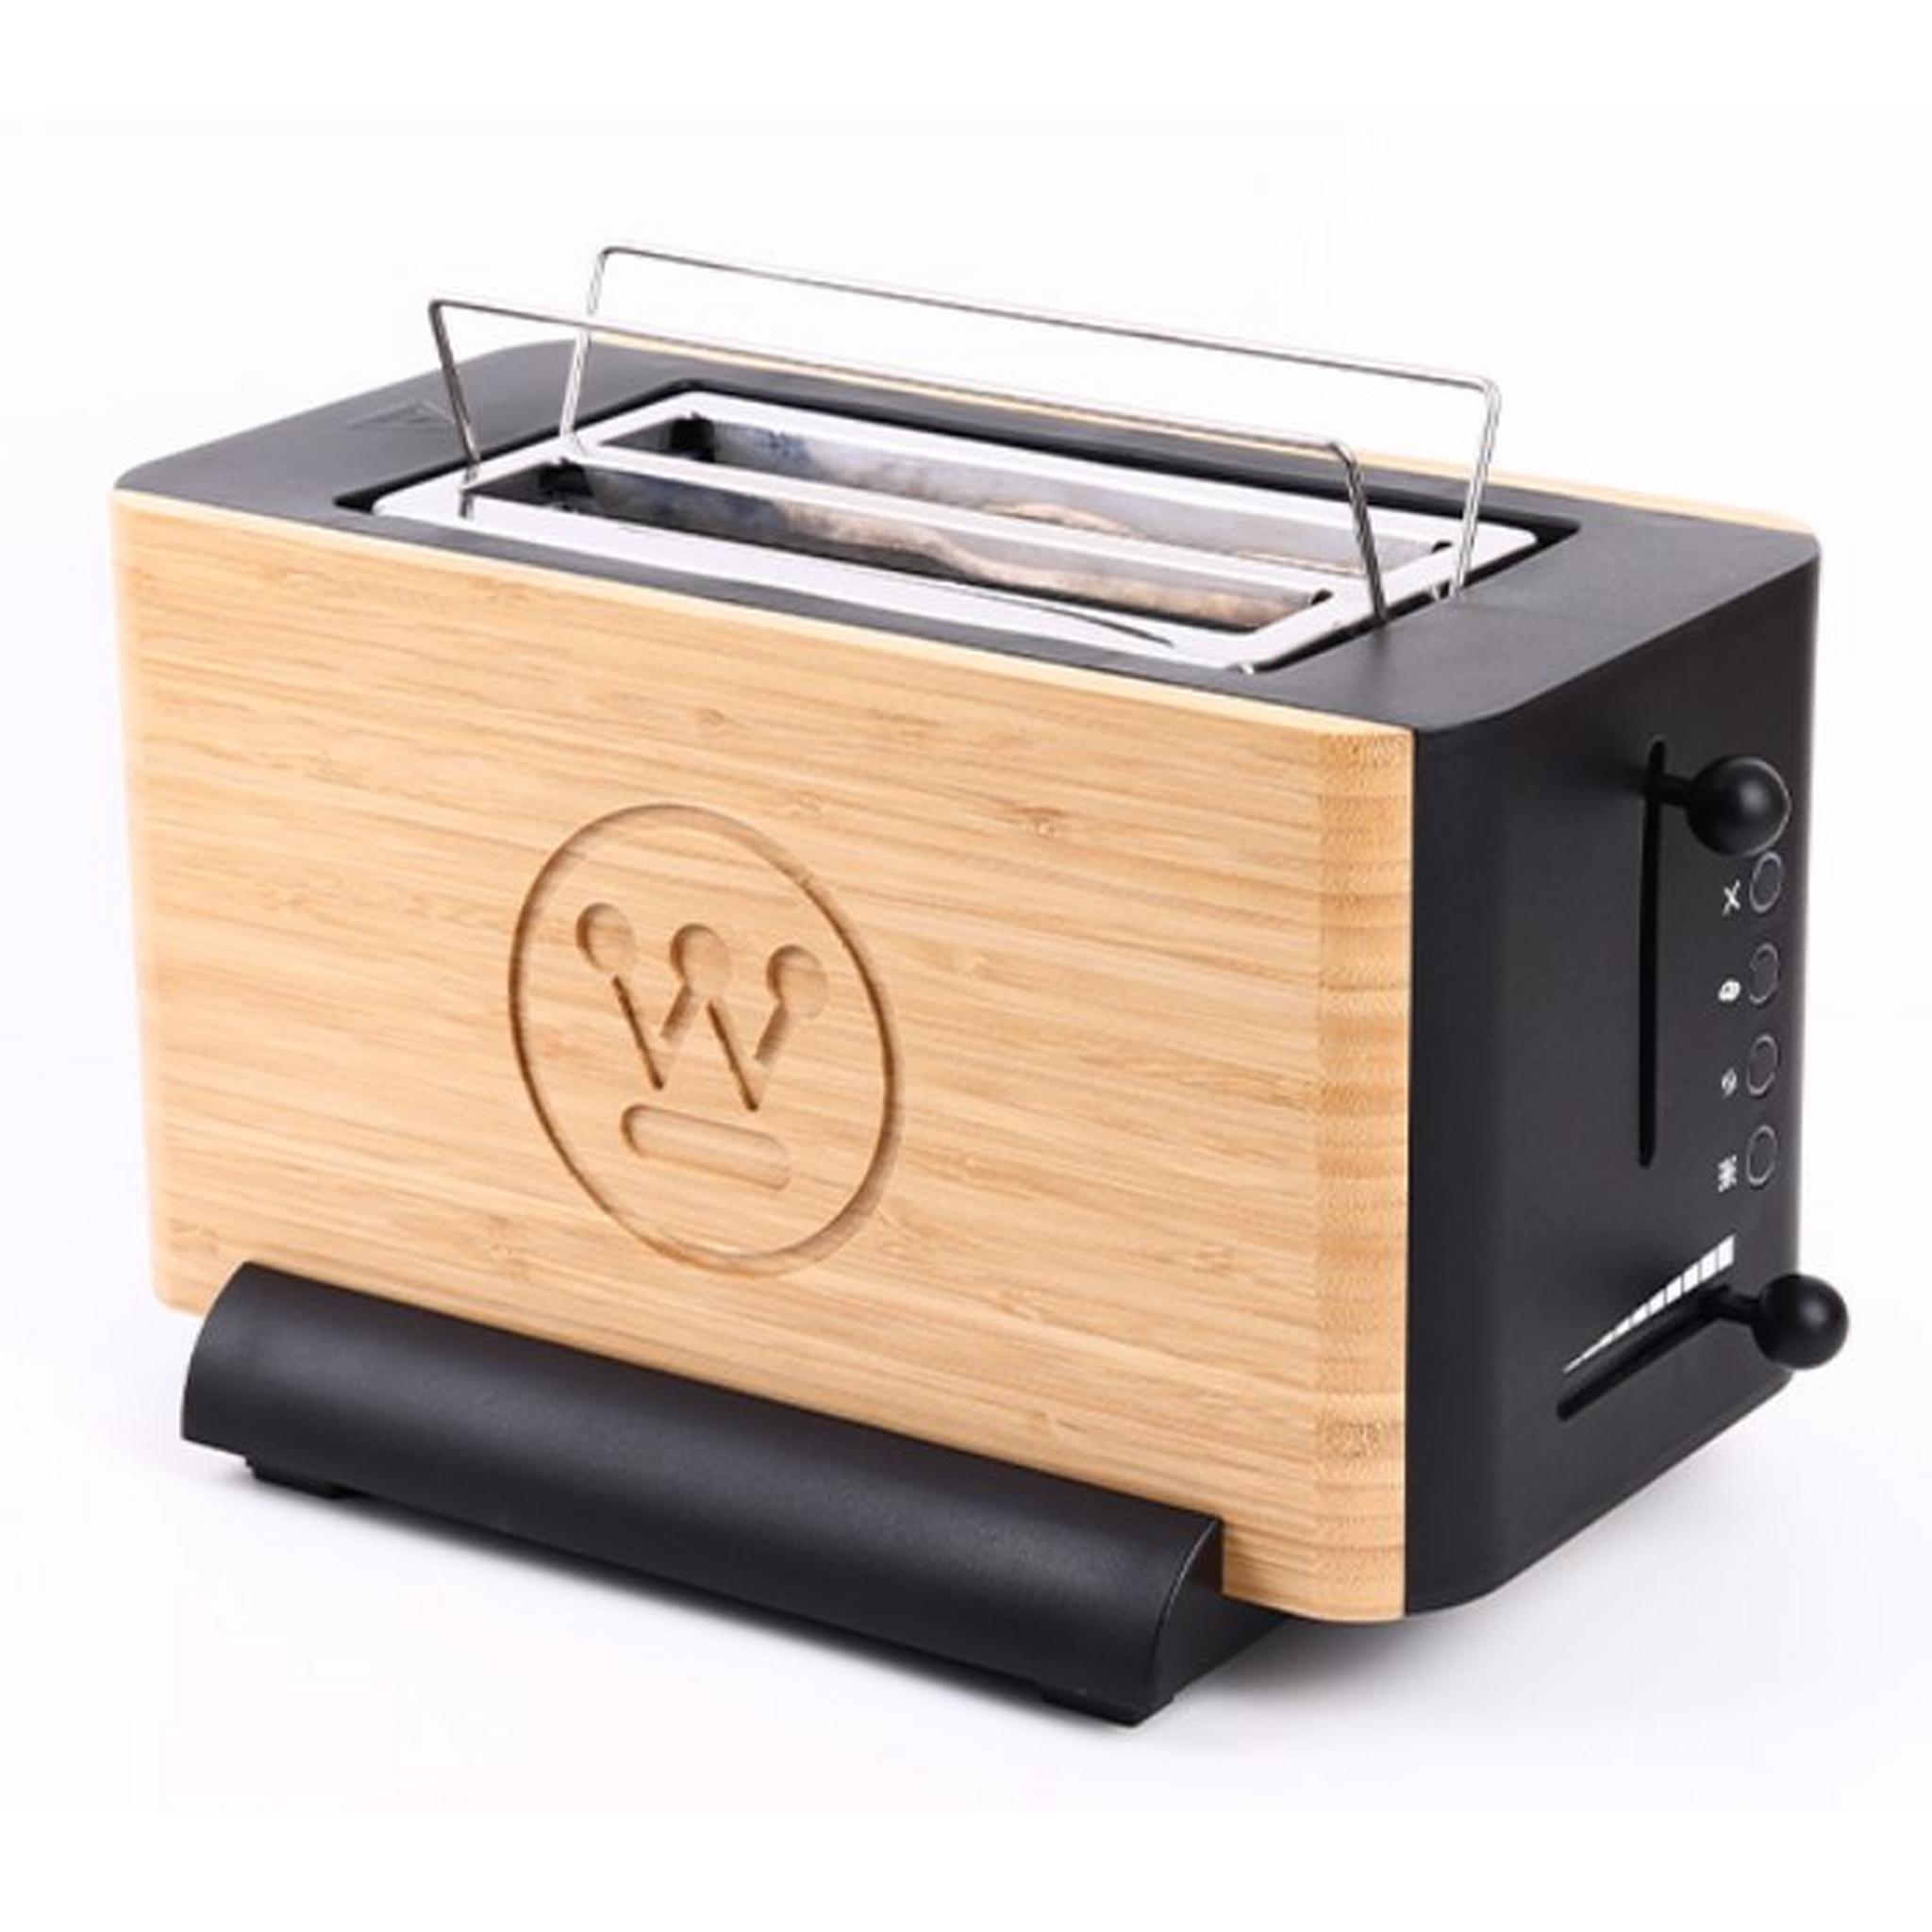 WestingHouse Toaster, 1400W, 2 slices, WKTTF04BB – Black